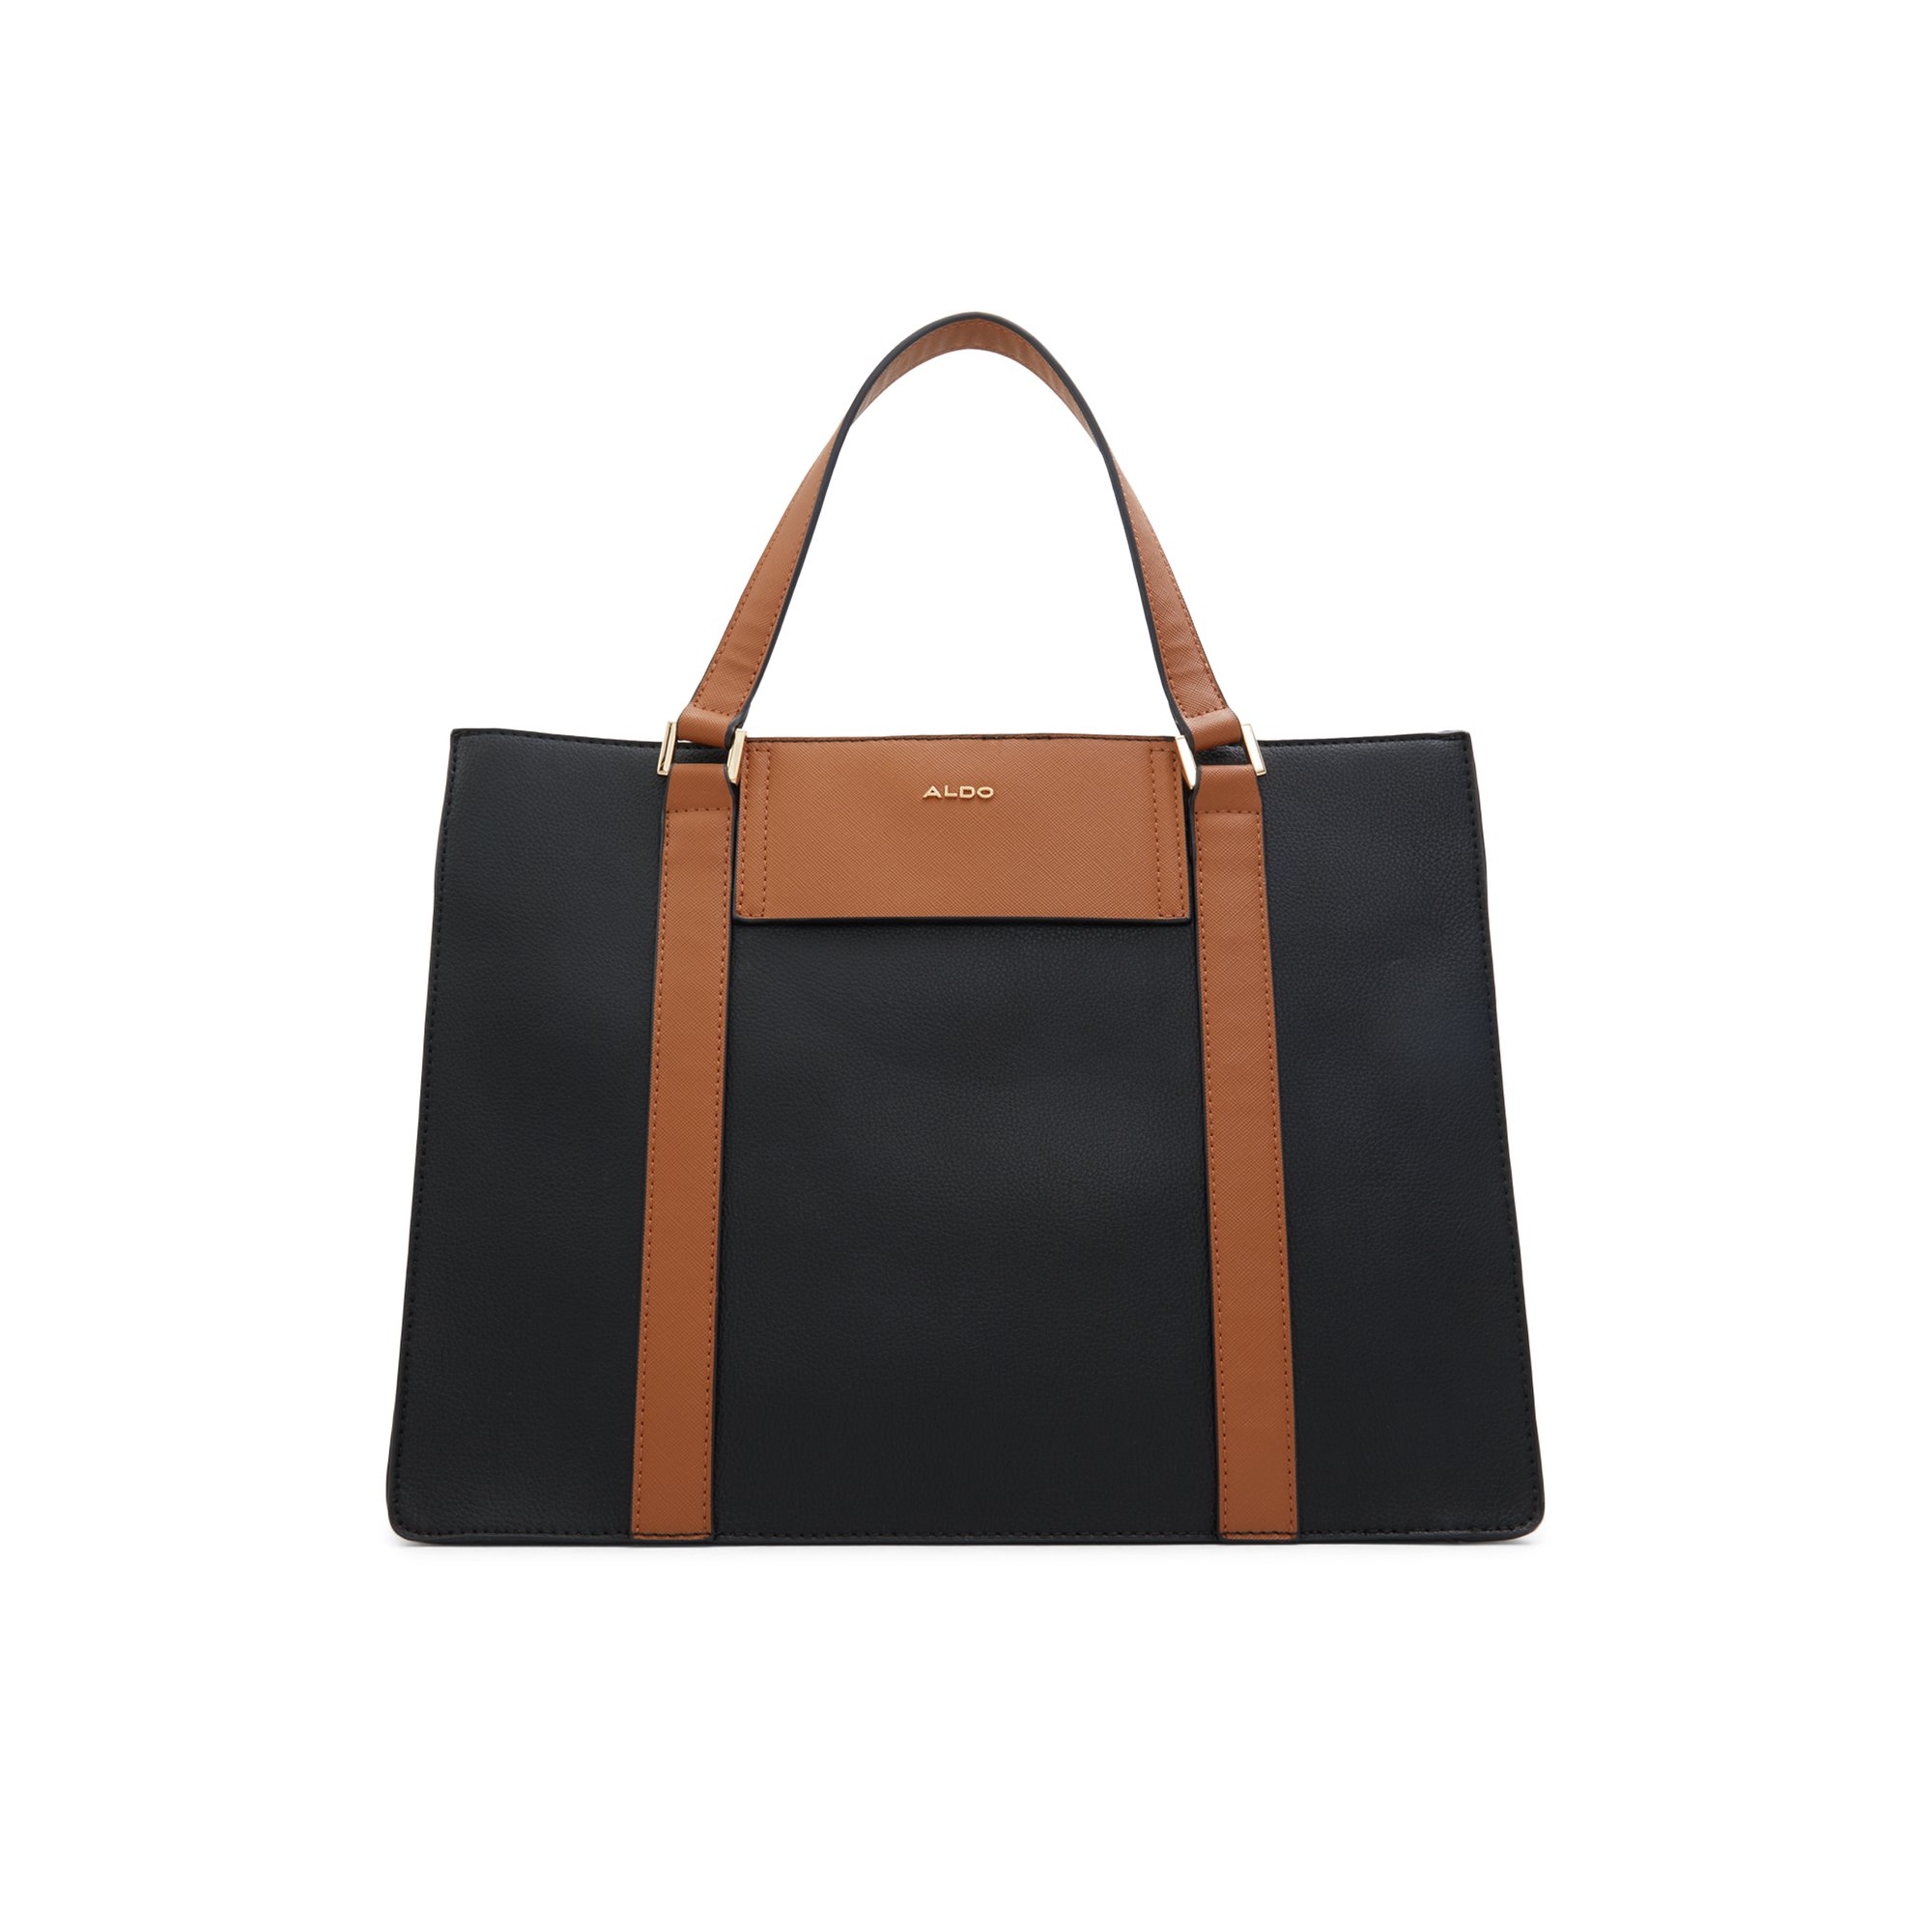 ALDO Allanbrookee - Women's Handbags Totes - Black